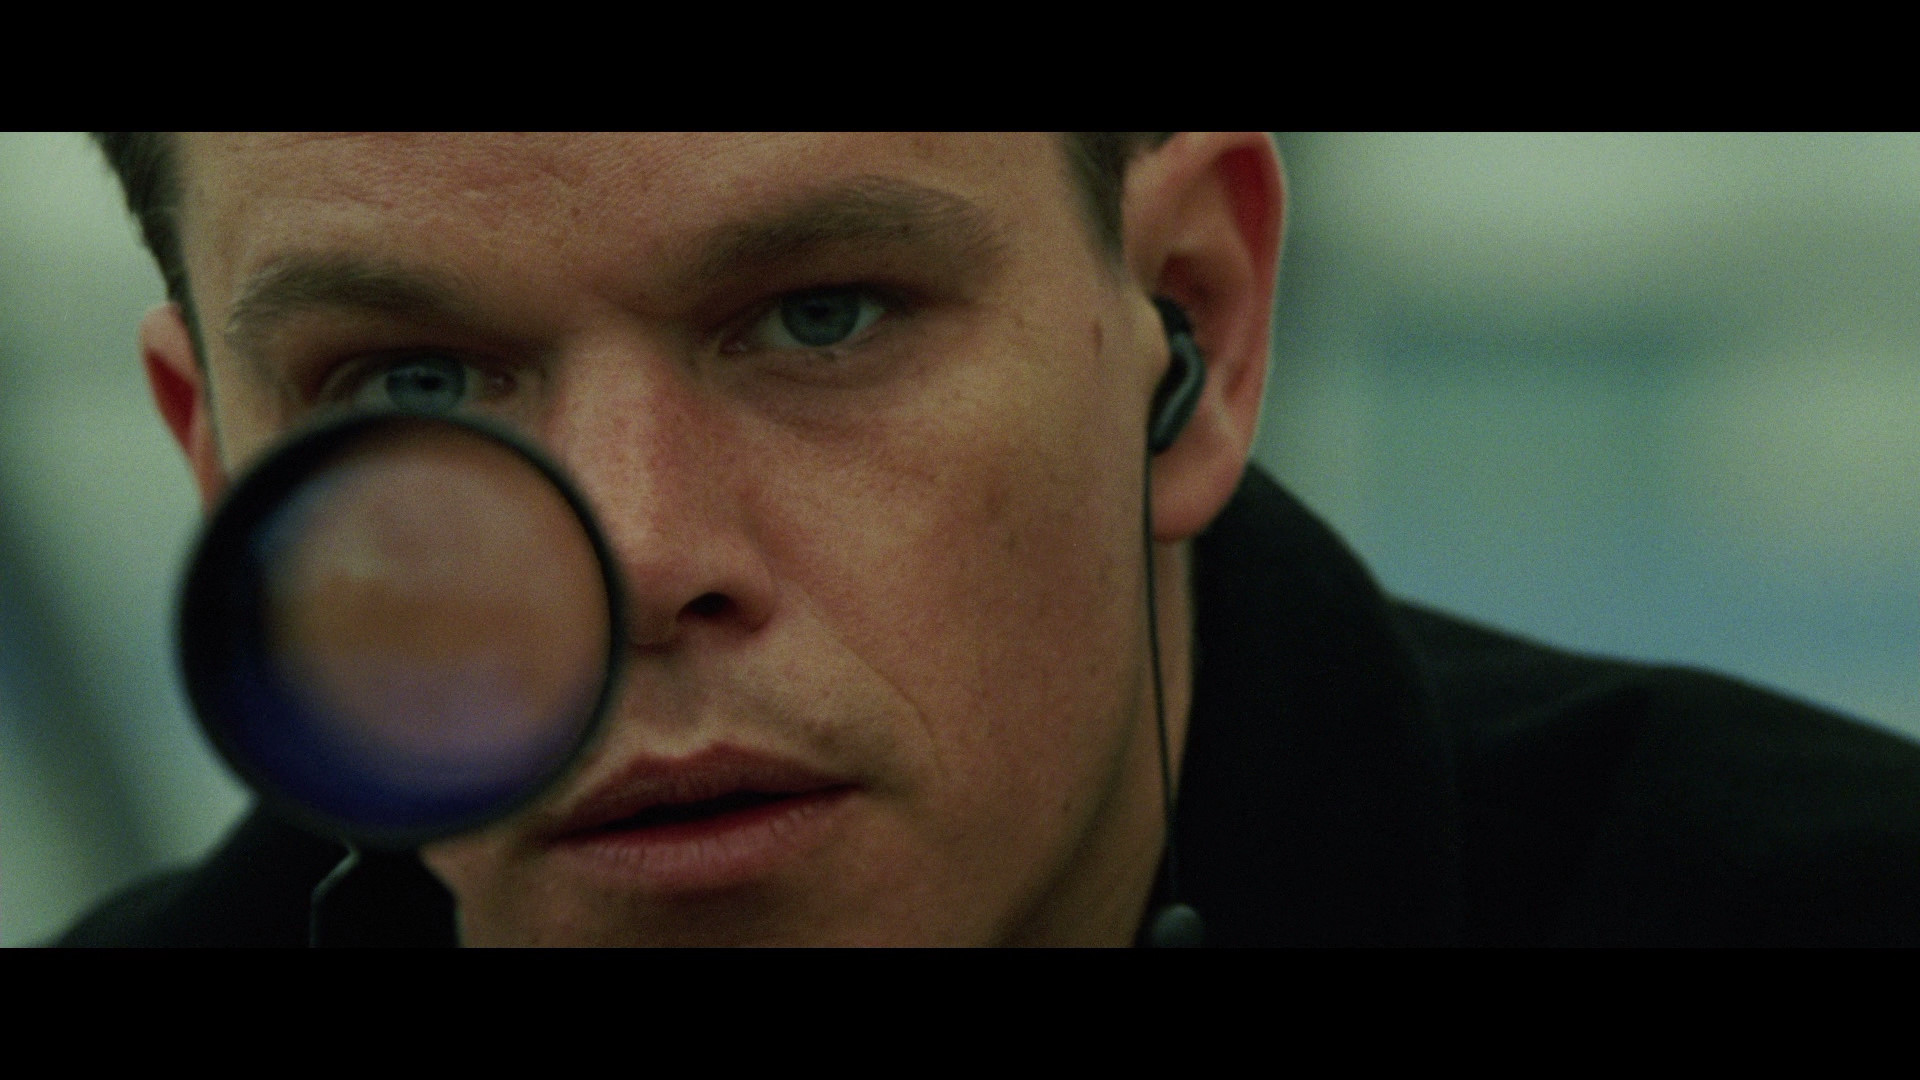 The Bourne Ultimatum: Rooftop Pursuit movie free  hd